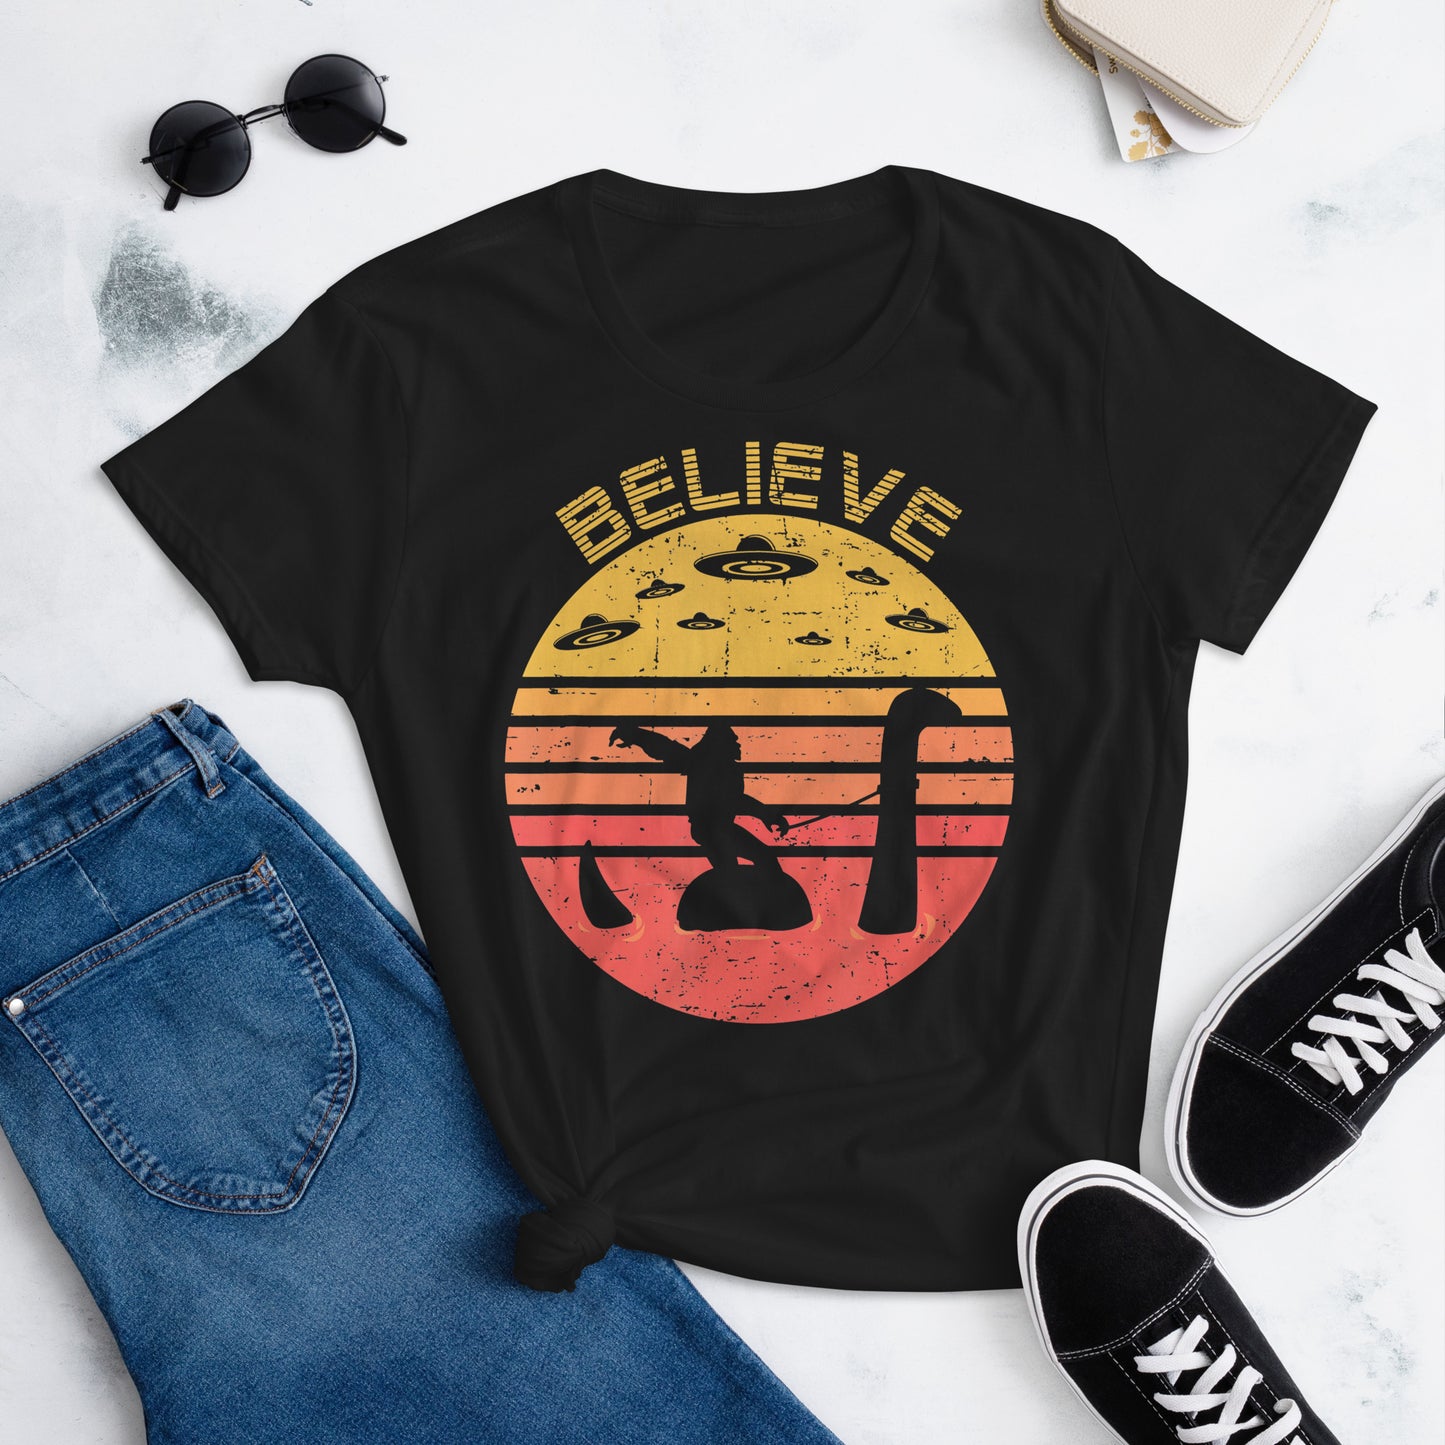 Believe - Women's T-Shirt | TheShirtfather